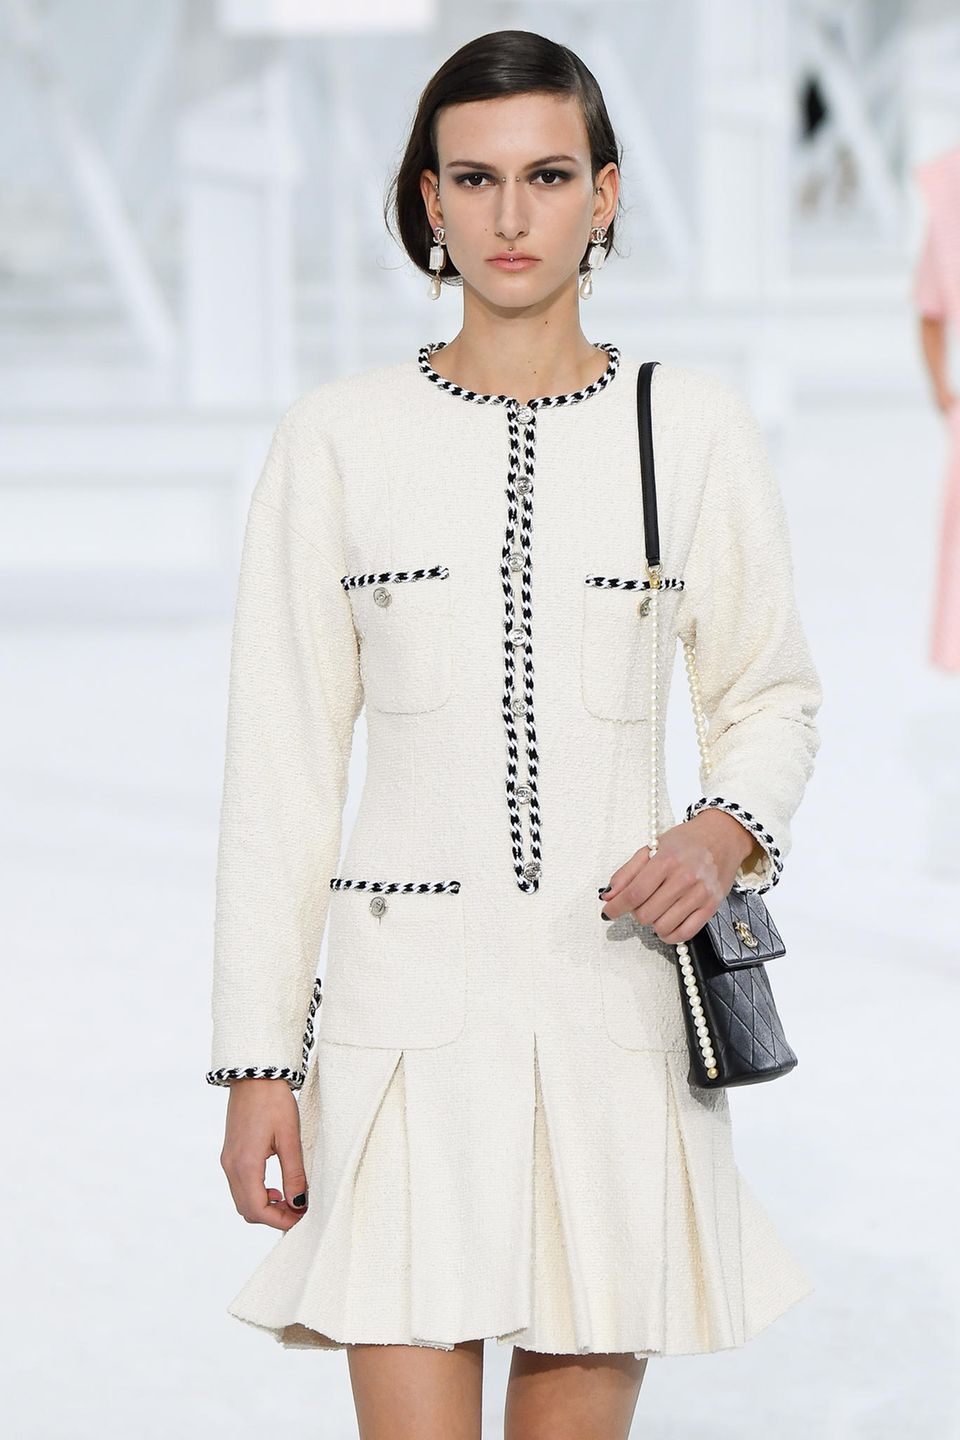 Georgina Rodríguez attends Louis Vuitton fashion show in Paris